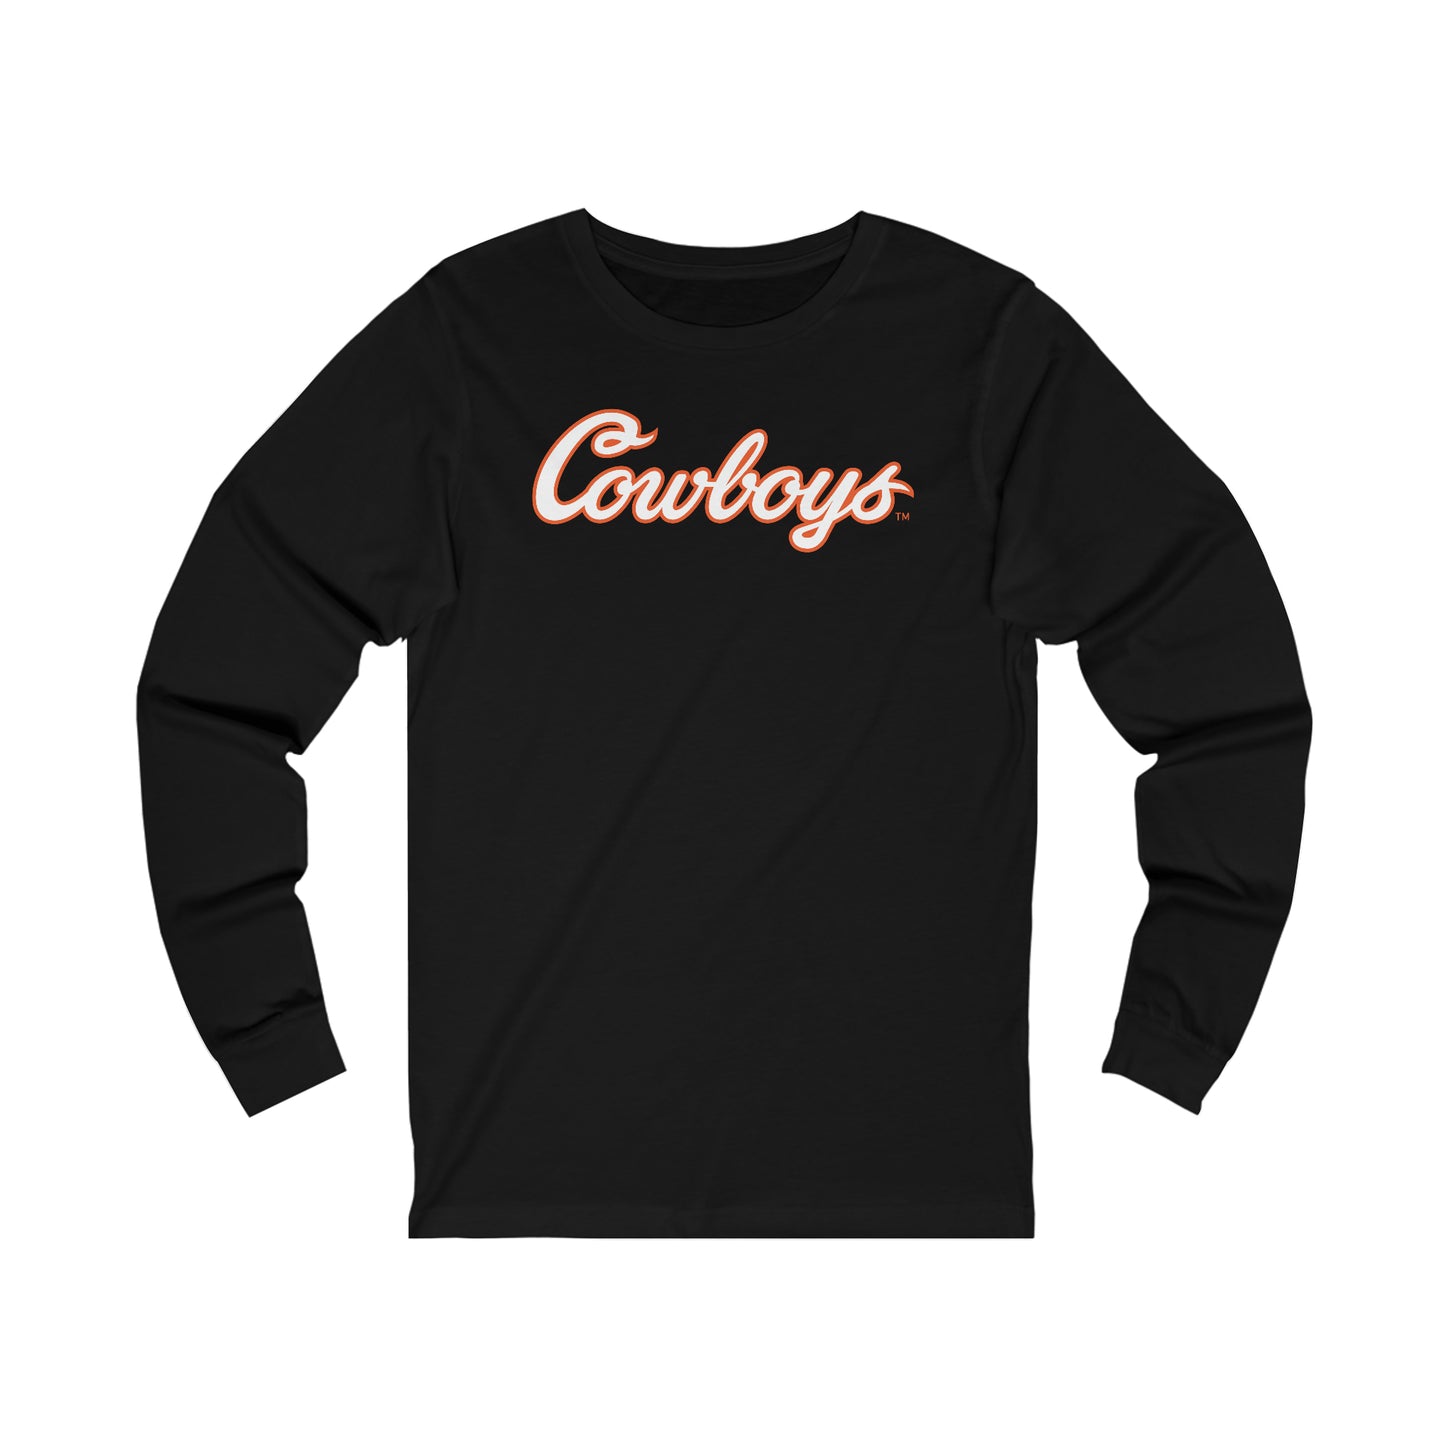 Dalton Cooper #71 Cursive Cowboys Long Sleeve T-Shirt